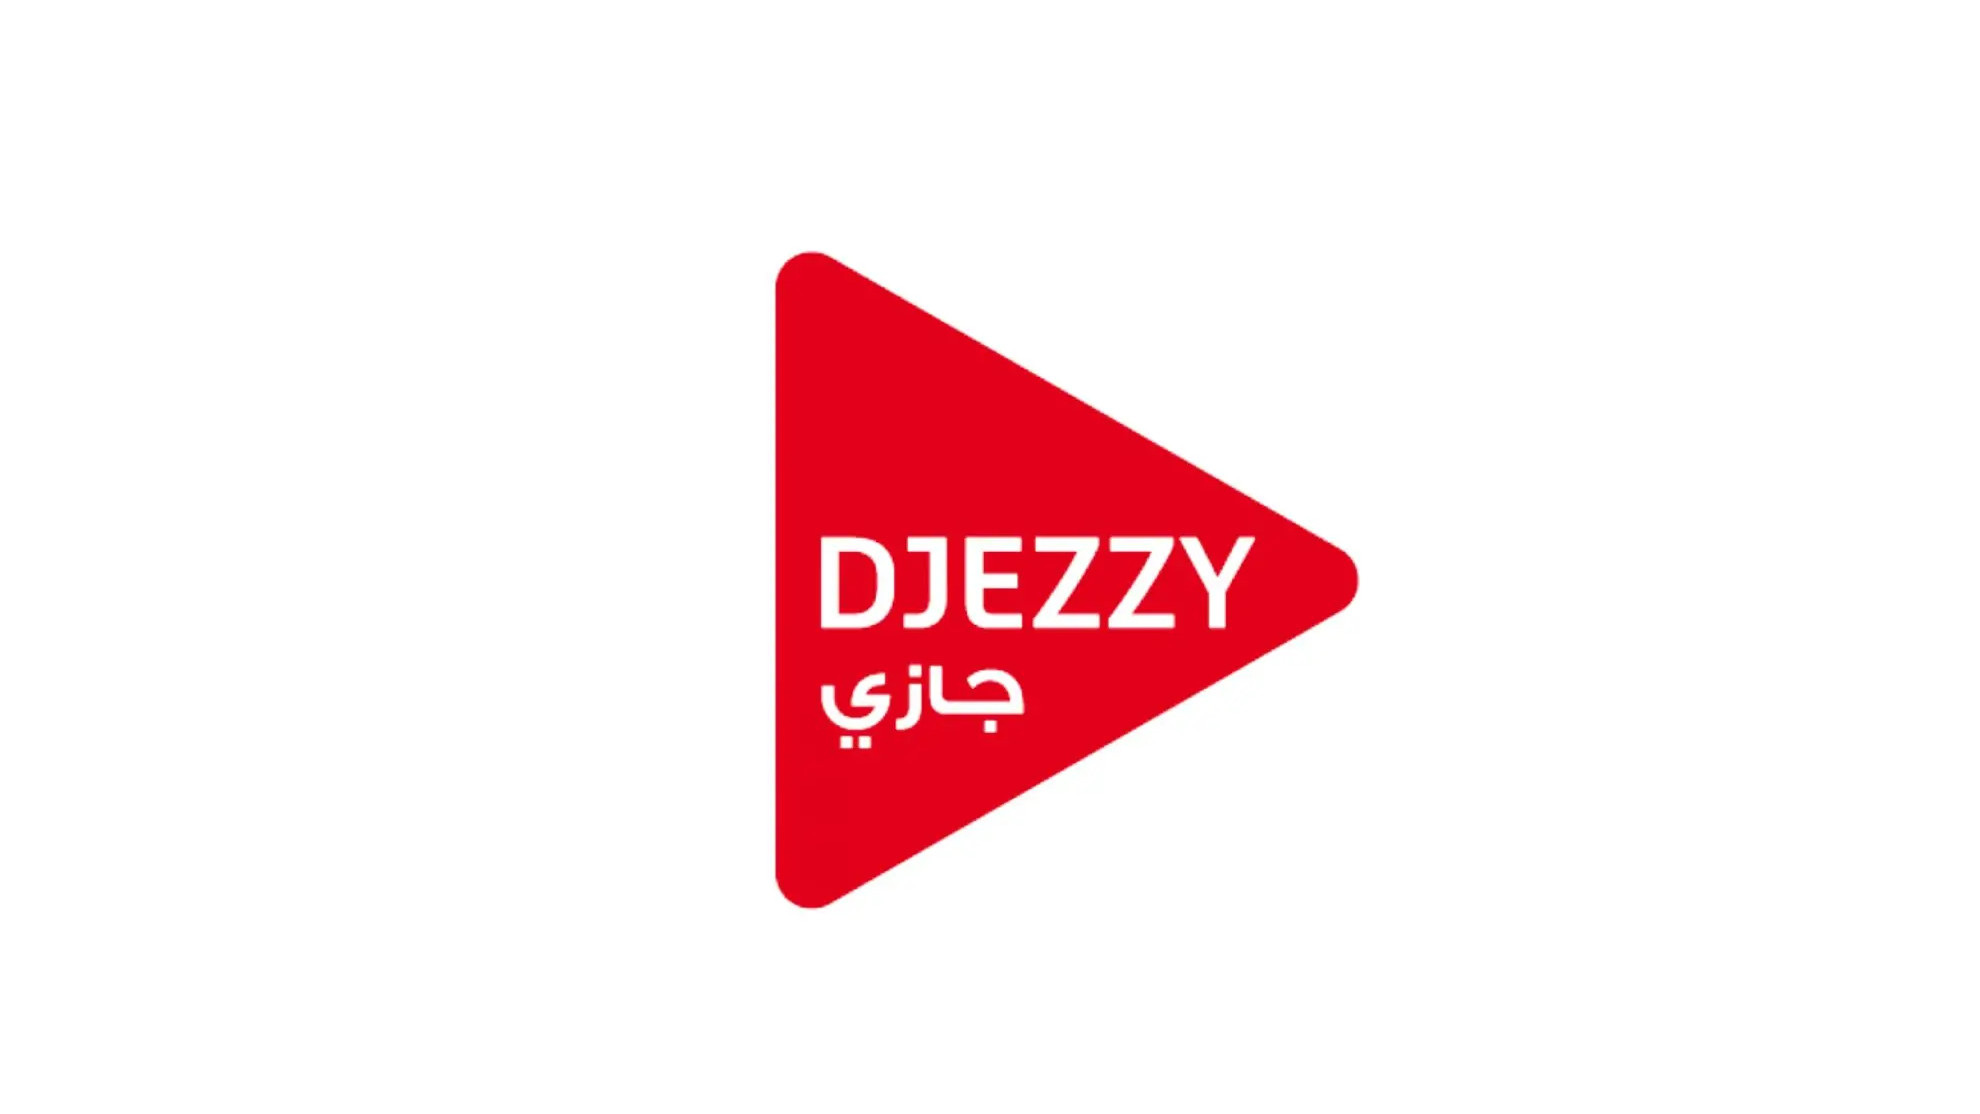 Djezzy 100 DZD Mobile Top-up DZ (1.36$)